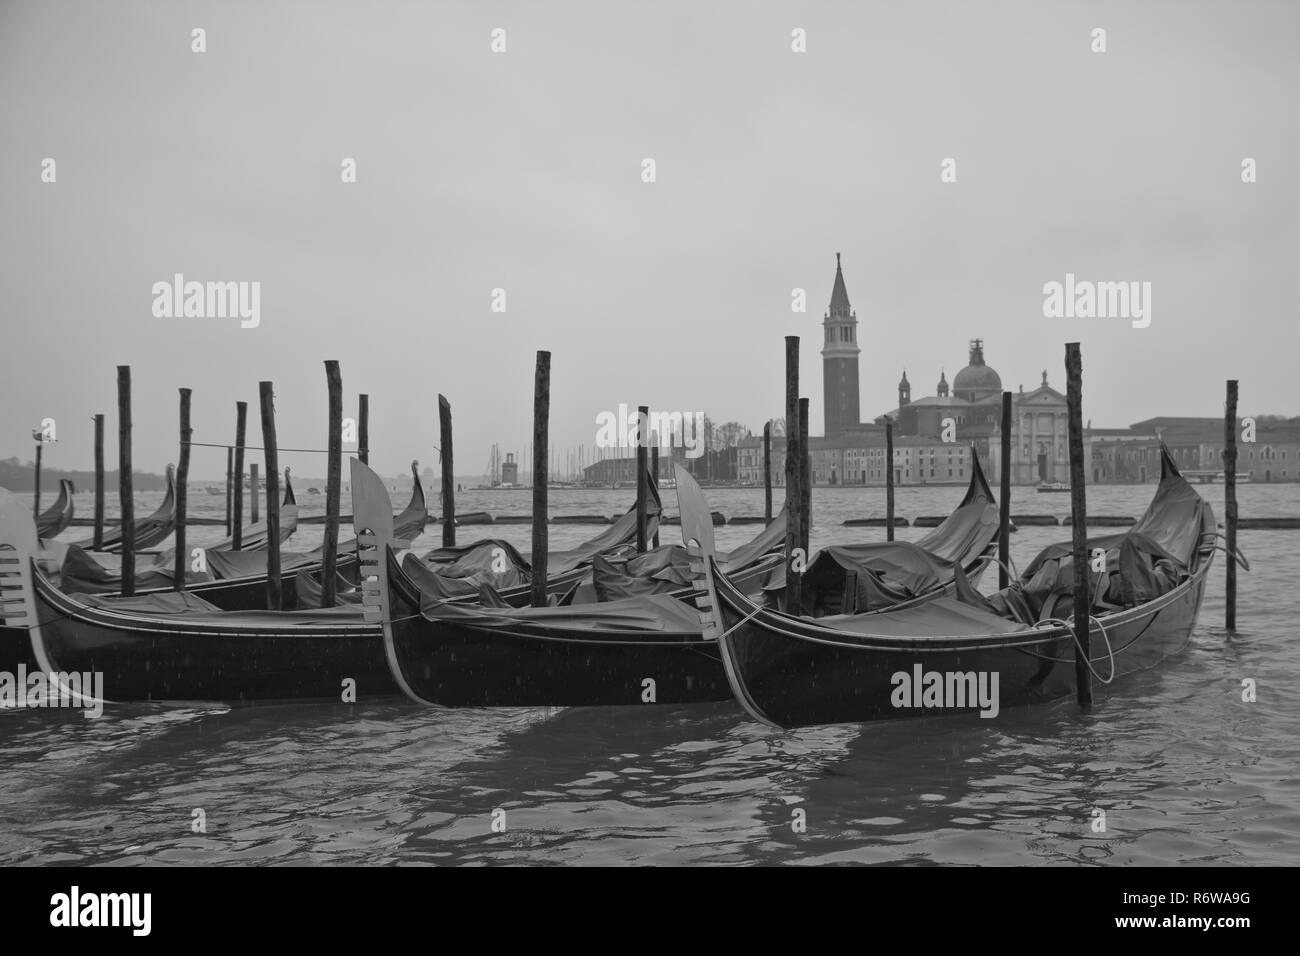 Acqua alta - Venice flooding. Venice, the capital of northern Italy’s Veneto region, is built on more than 100 small islands. Stock Photo